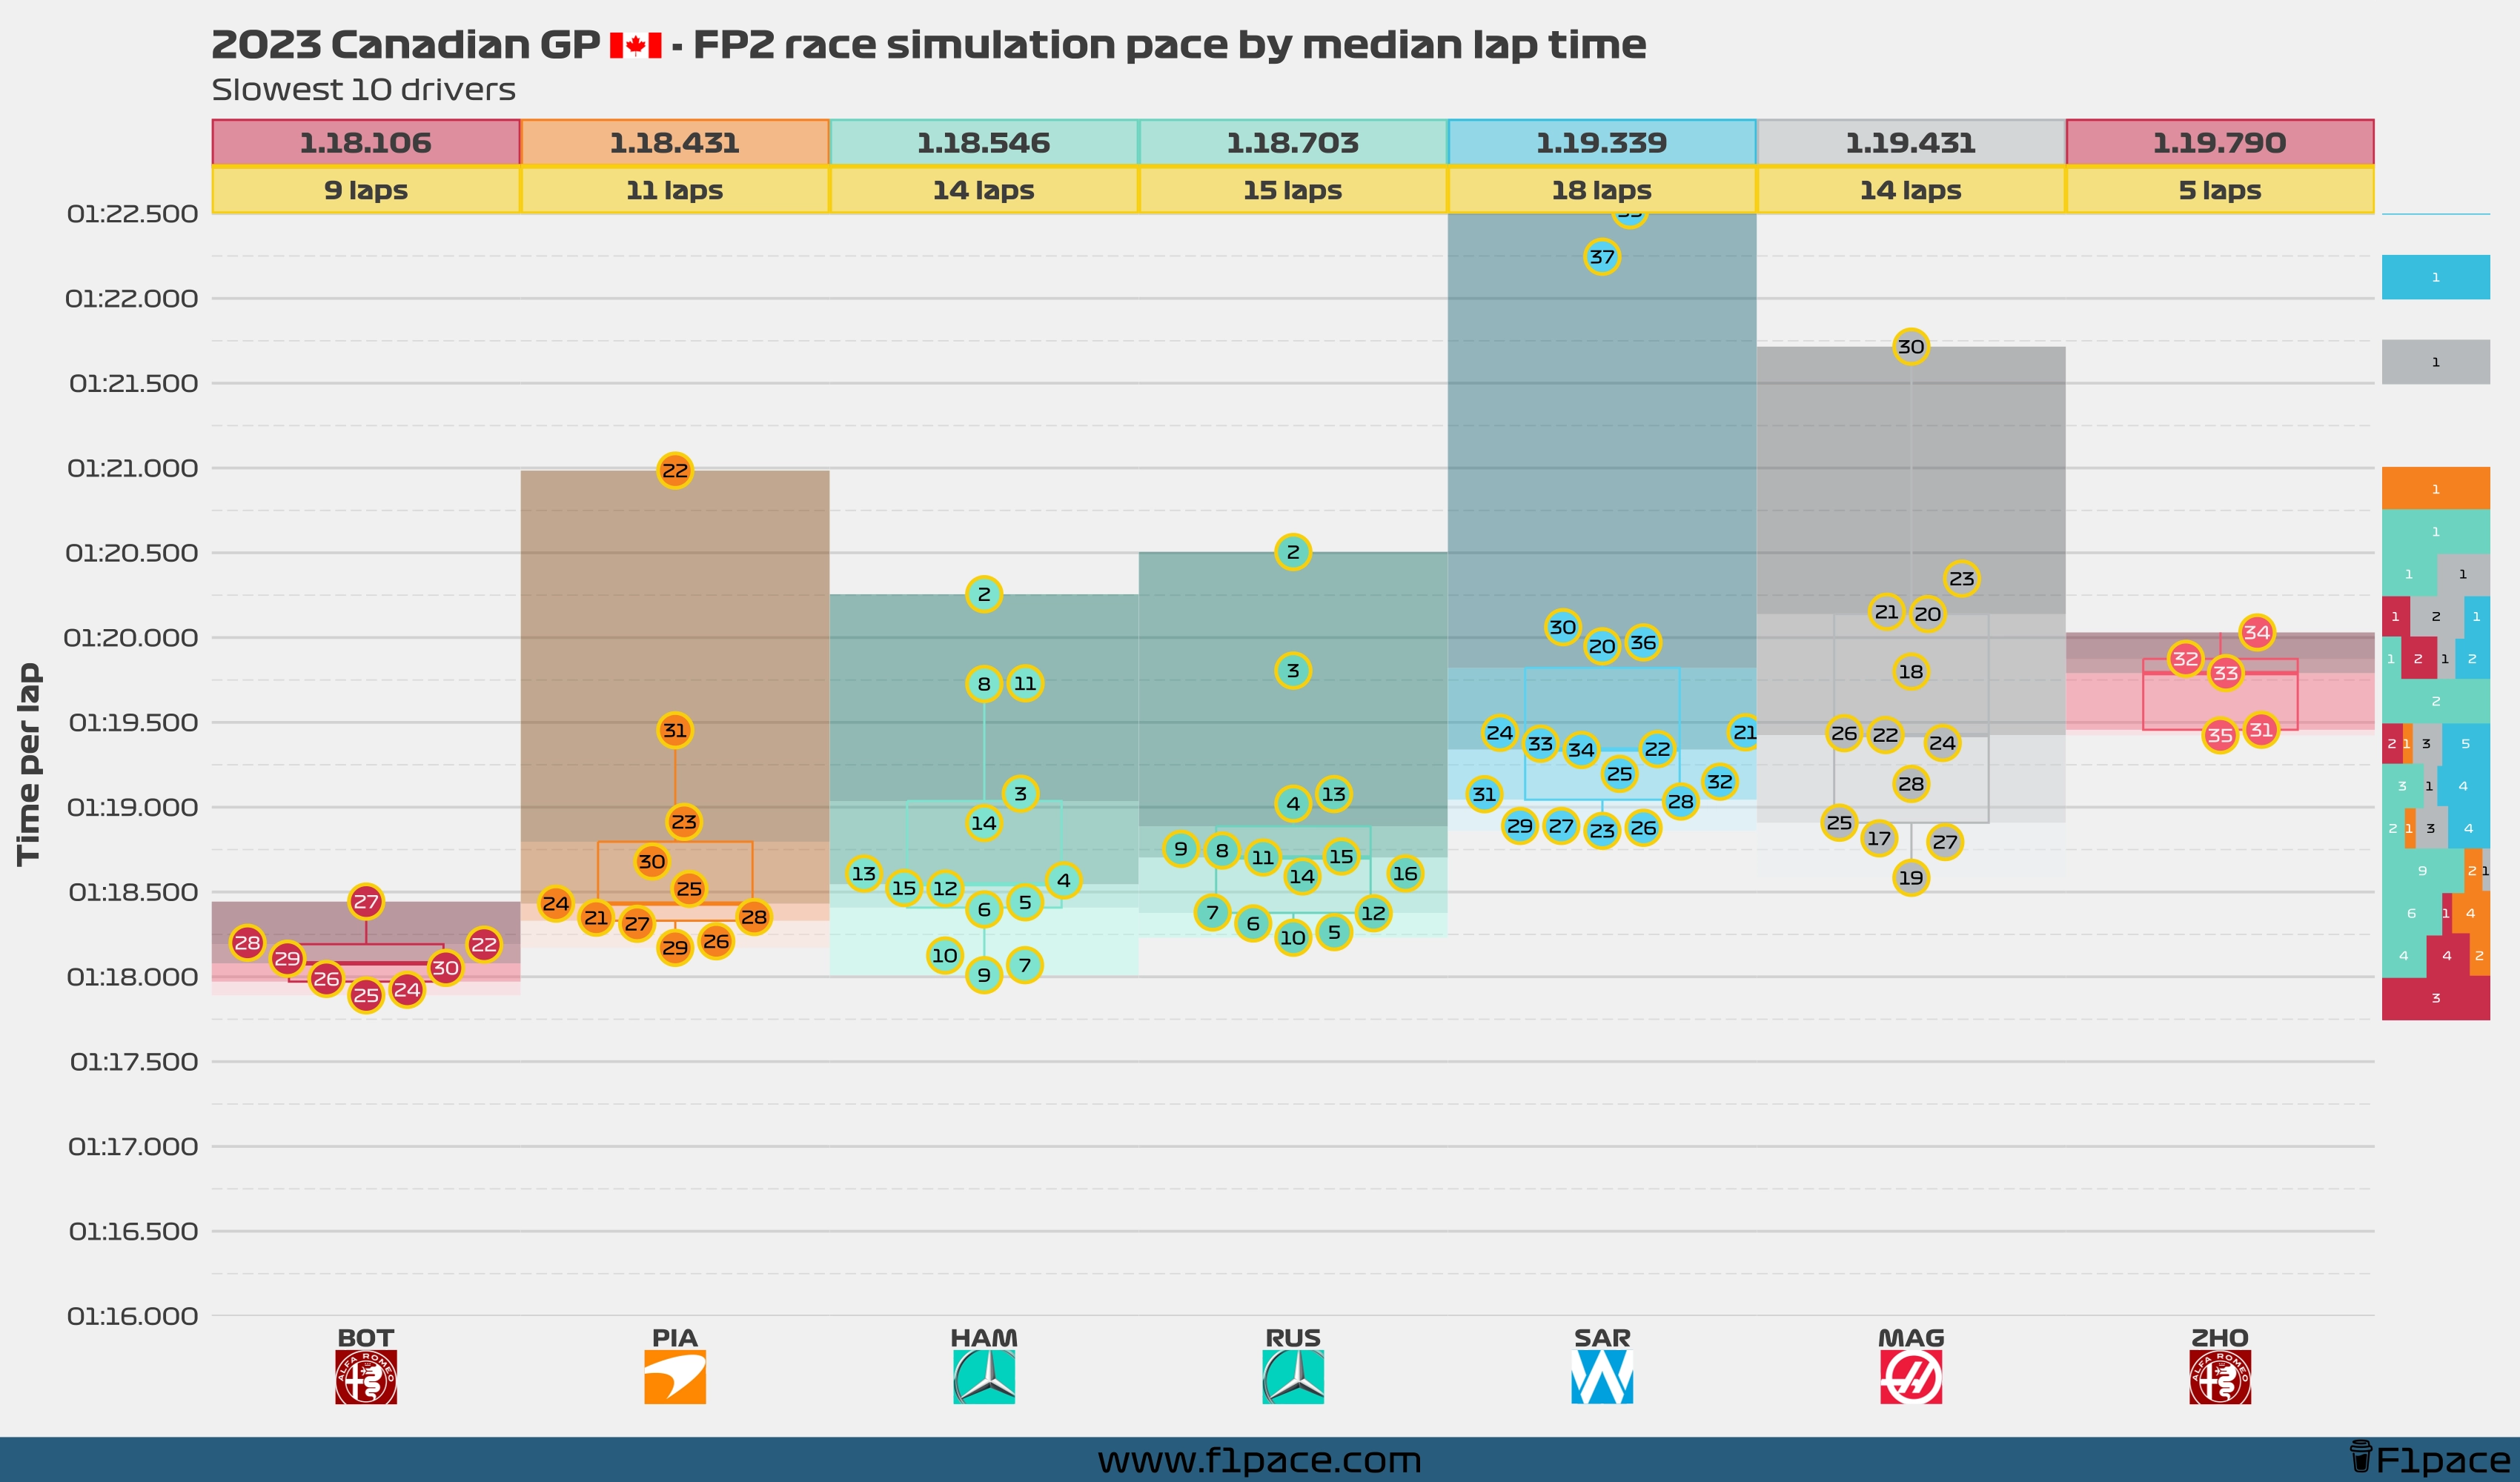 Race simulation pace: Bottom 10 drivers